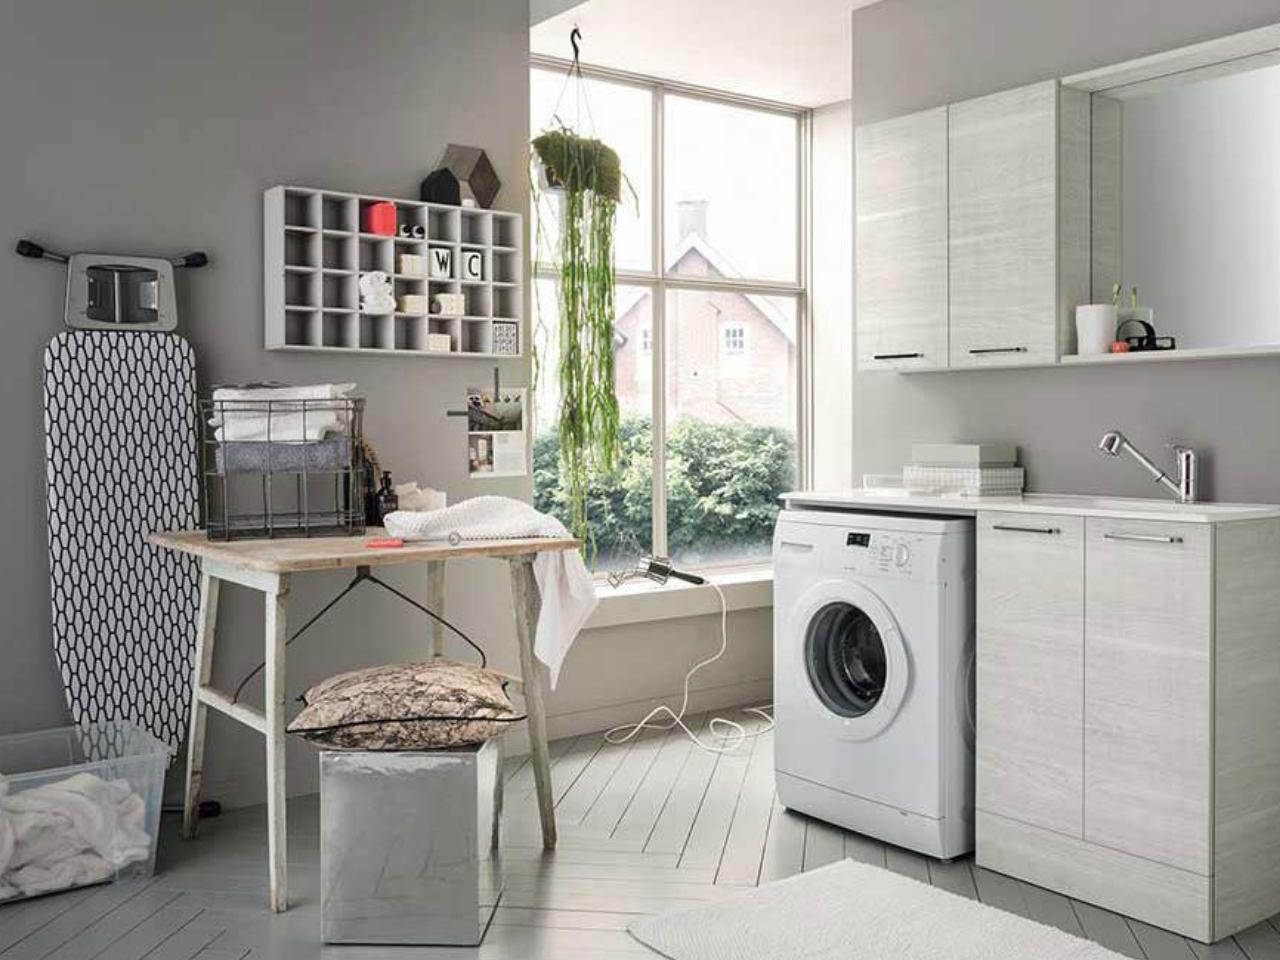 Un'area lavanderia in casa? Un'ottima idea!